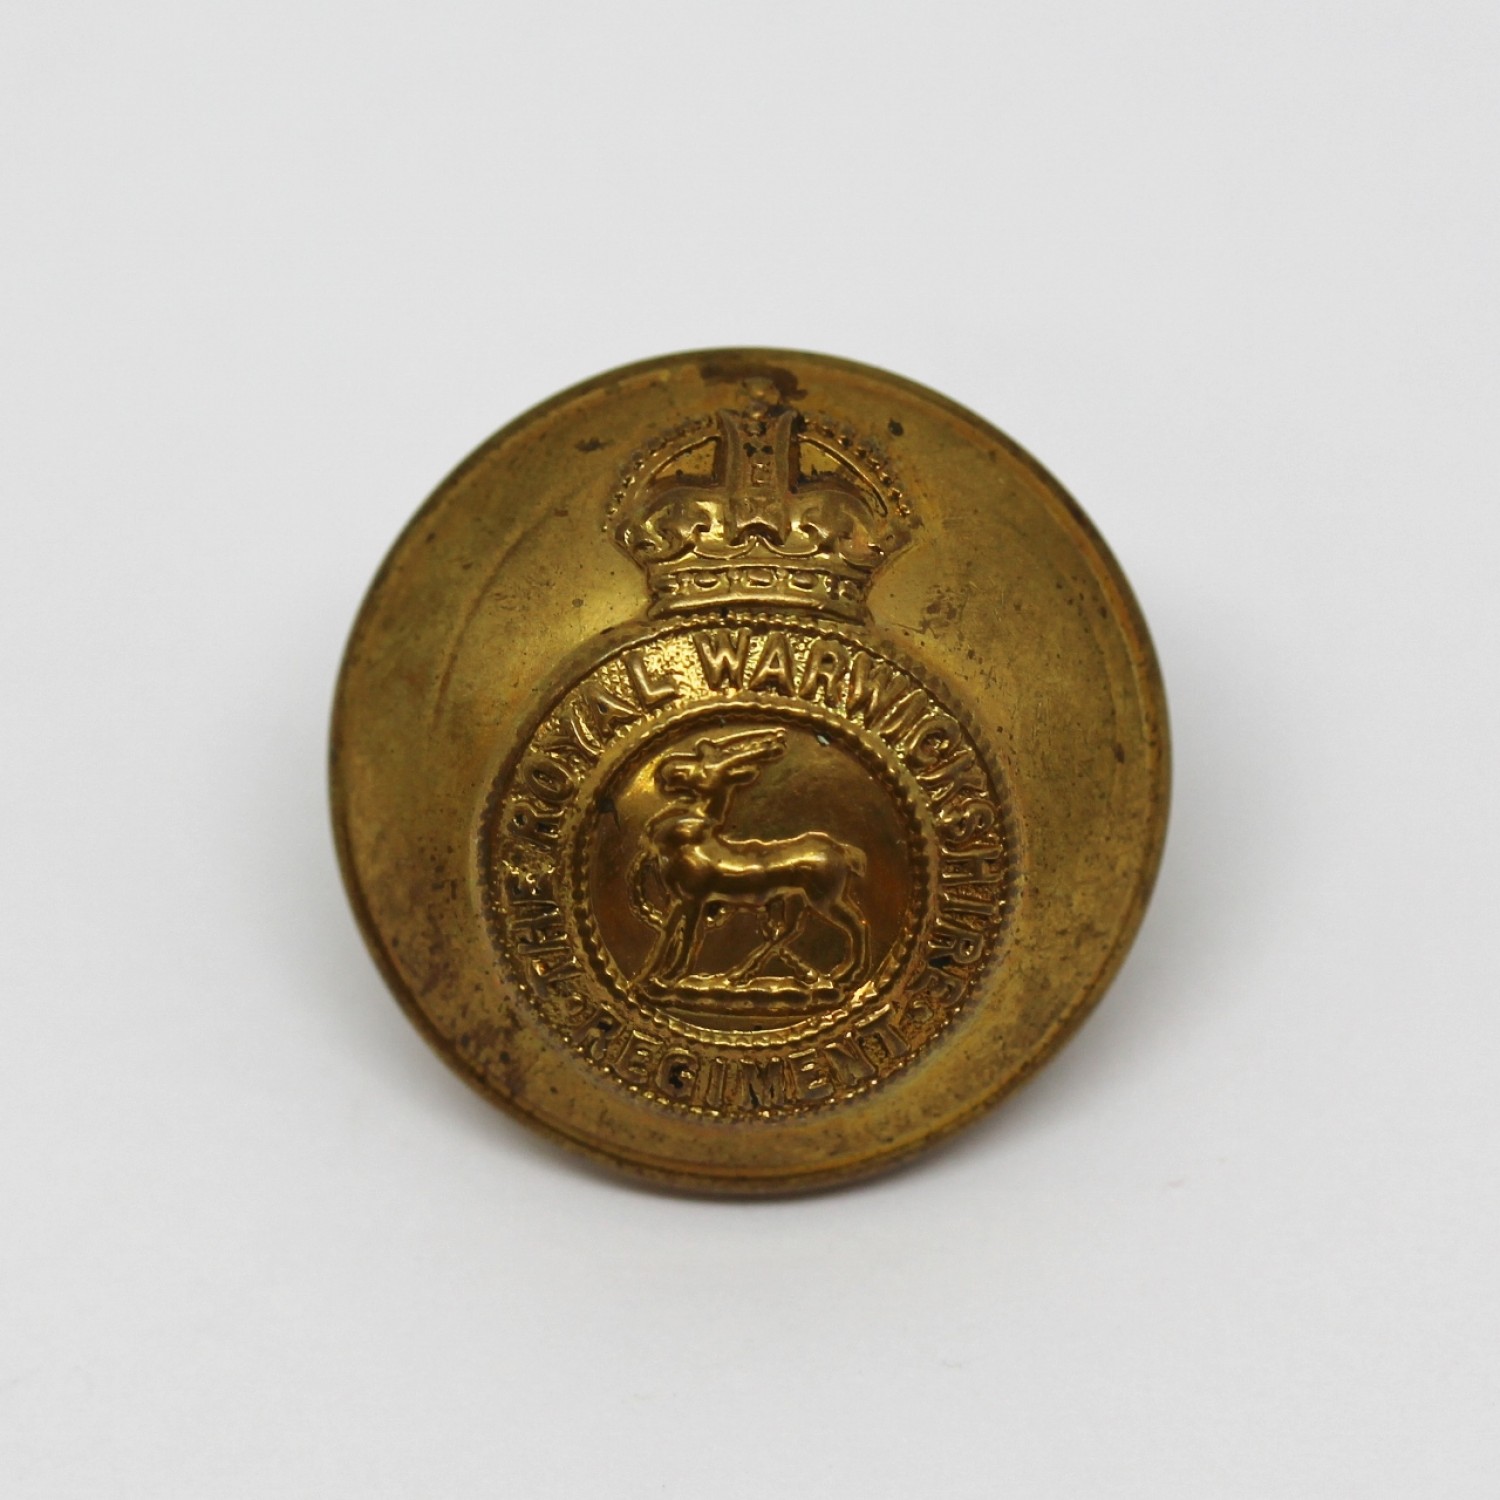 Royal Warwickshire Regiment Officer's Button - King's Crown (Large)